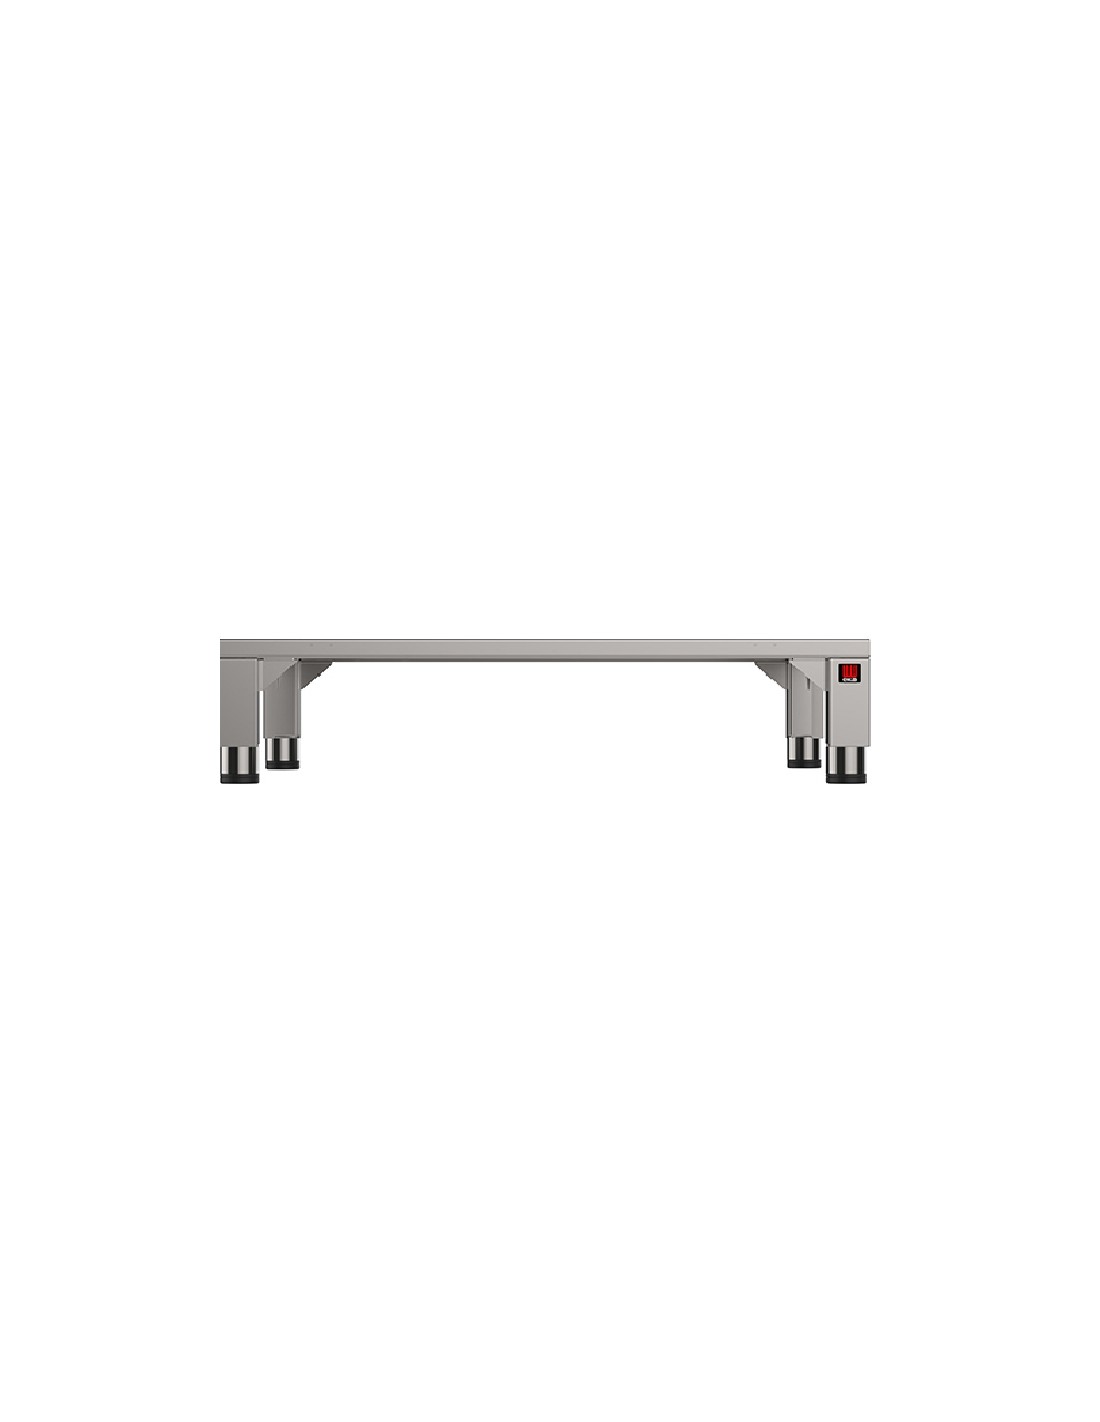 Mesa fija - Acciaio inox AISI 430 - Para hornos 4/6/10 bandejas - Para hornos superpuestos - Dimensiones cm 85 x 78.7 x22h